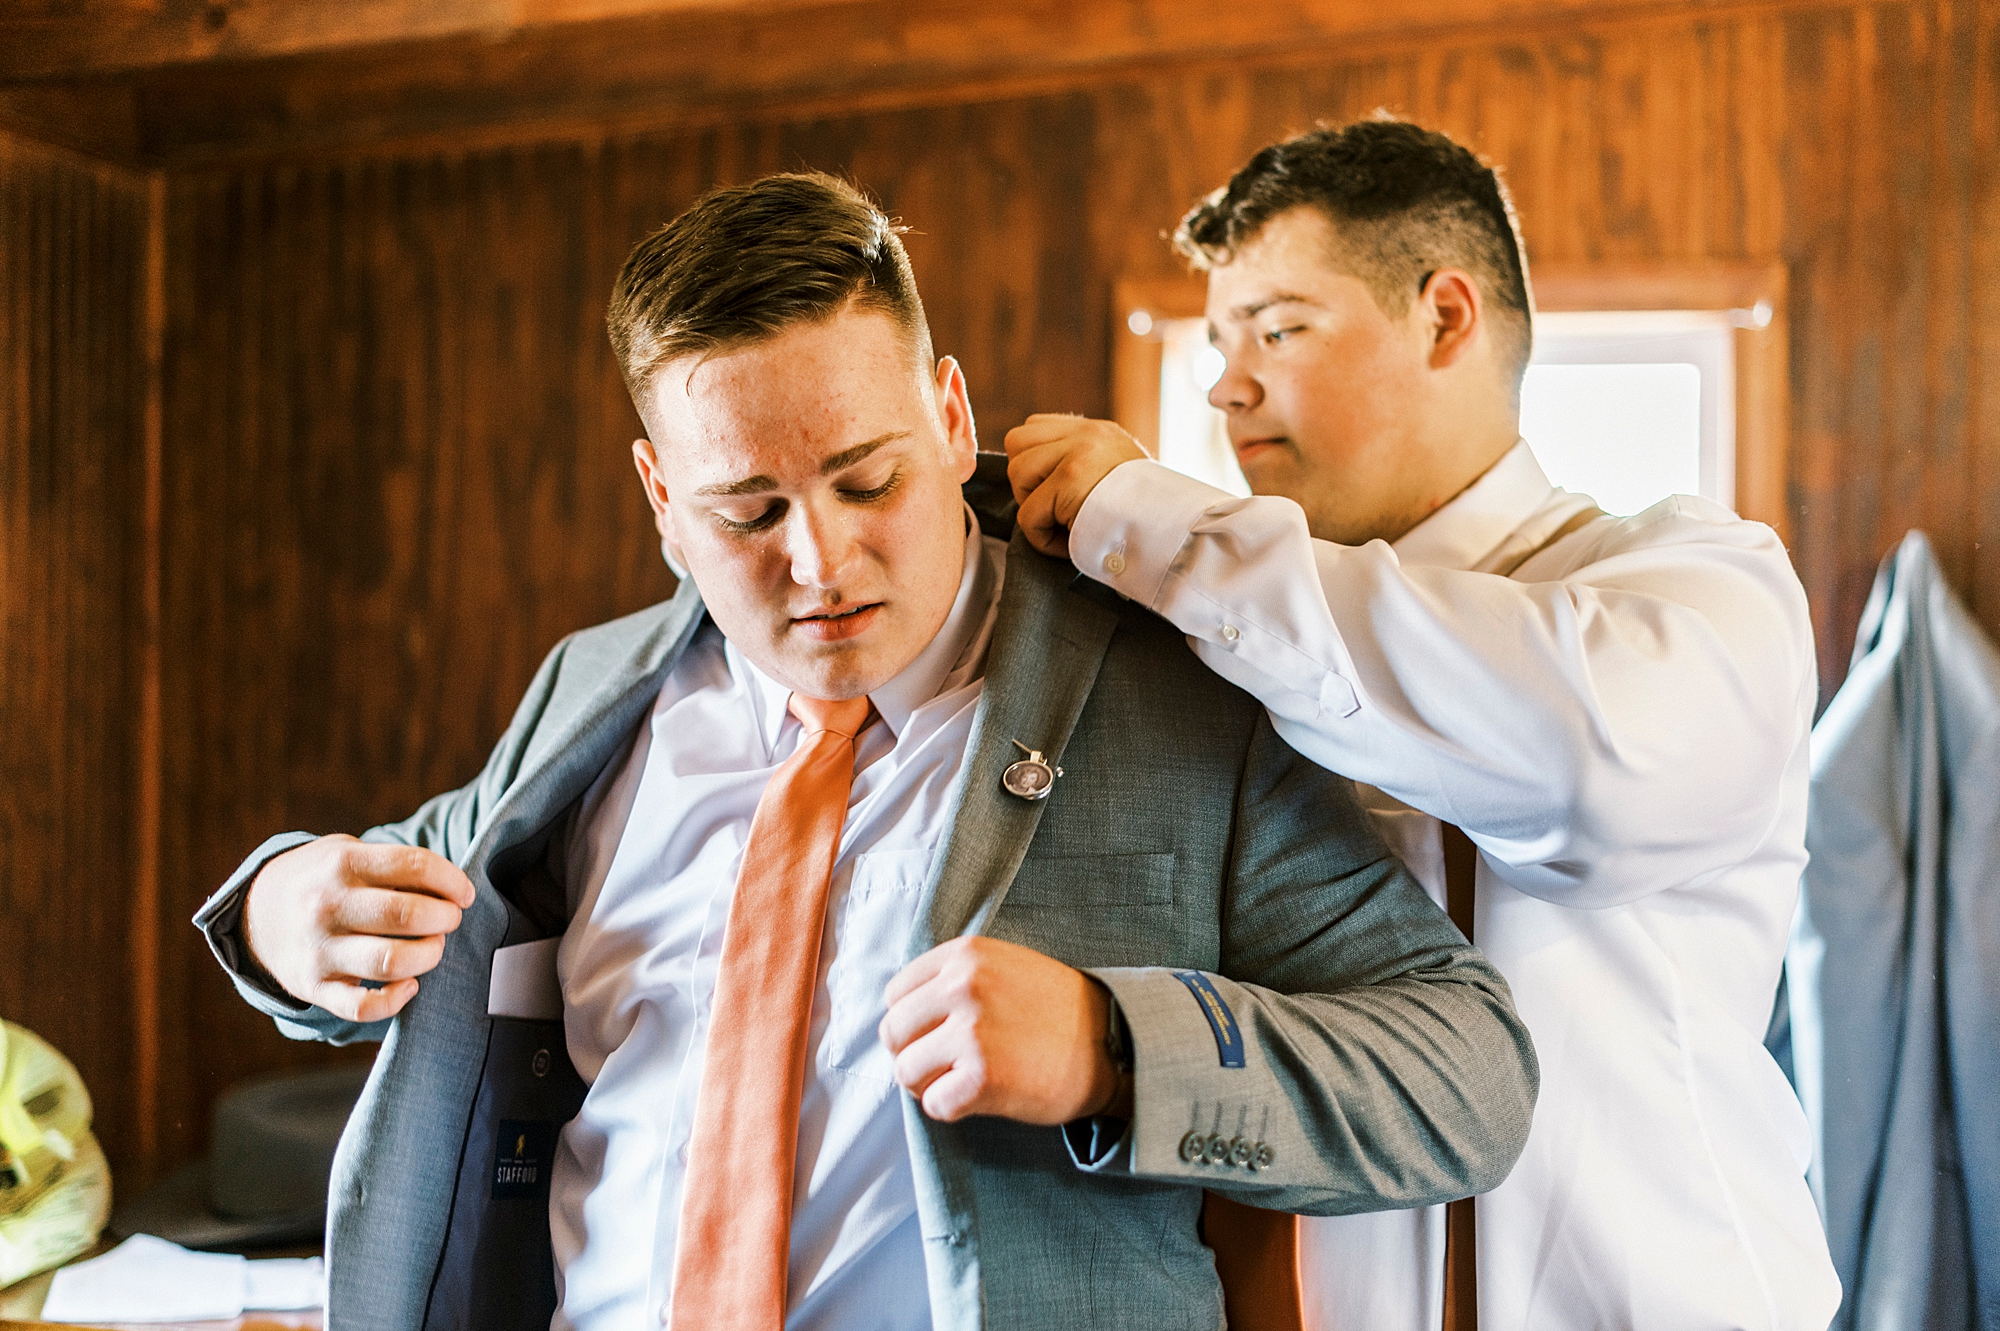 groomsman helps groom with suit and tie